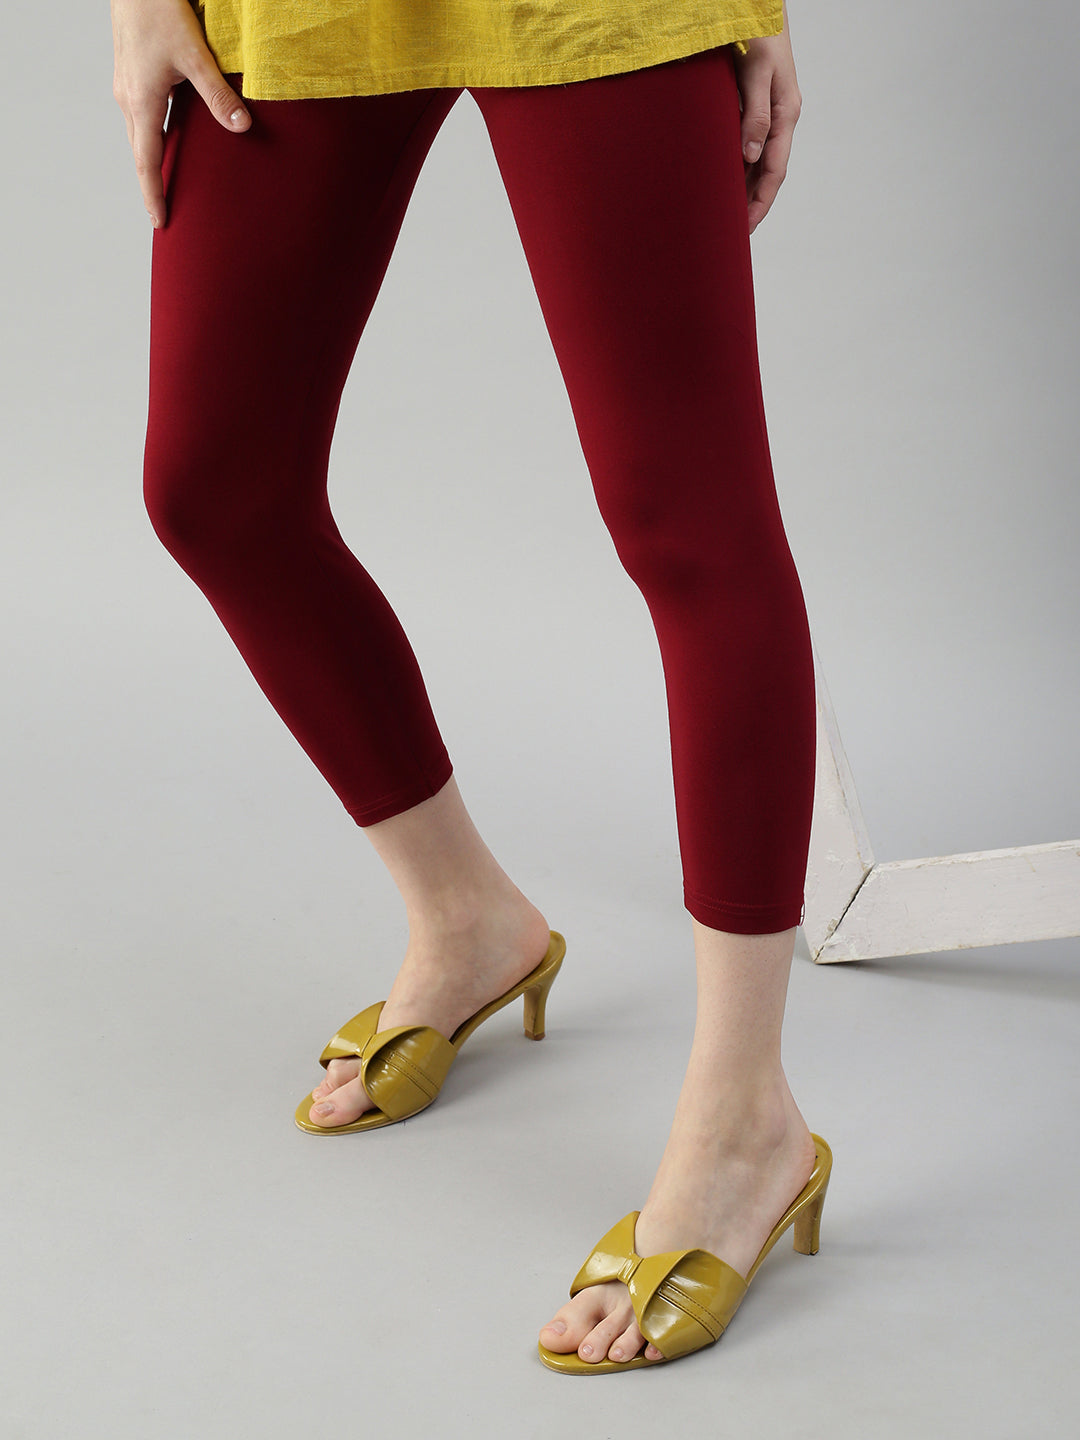 Black Color Cotton Knitted Leggings Slim Fit Ankle-Length Leggings For Girl  – Lady India